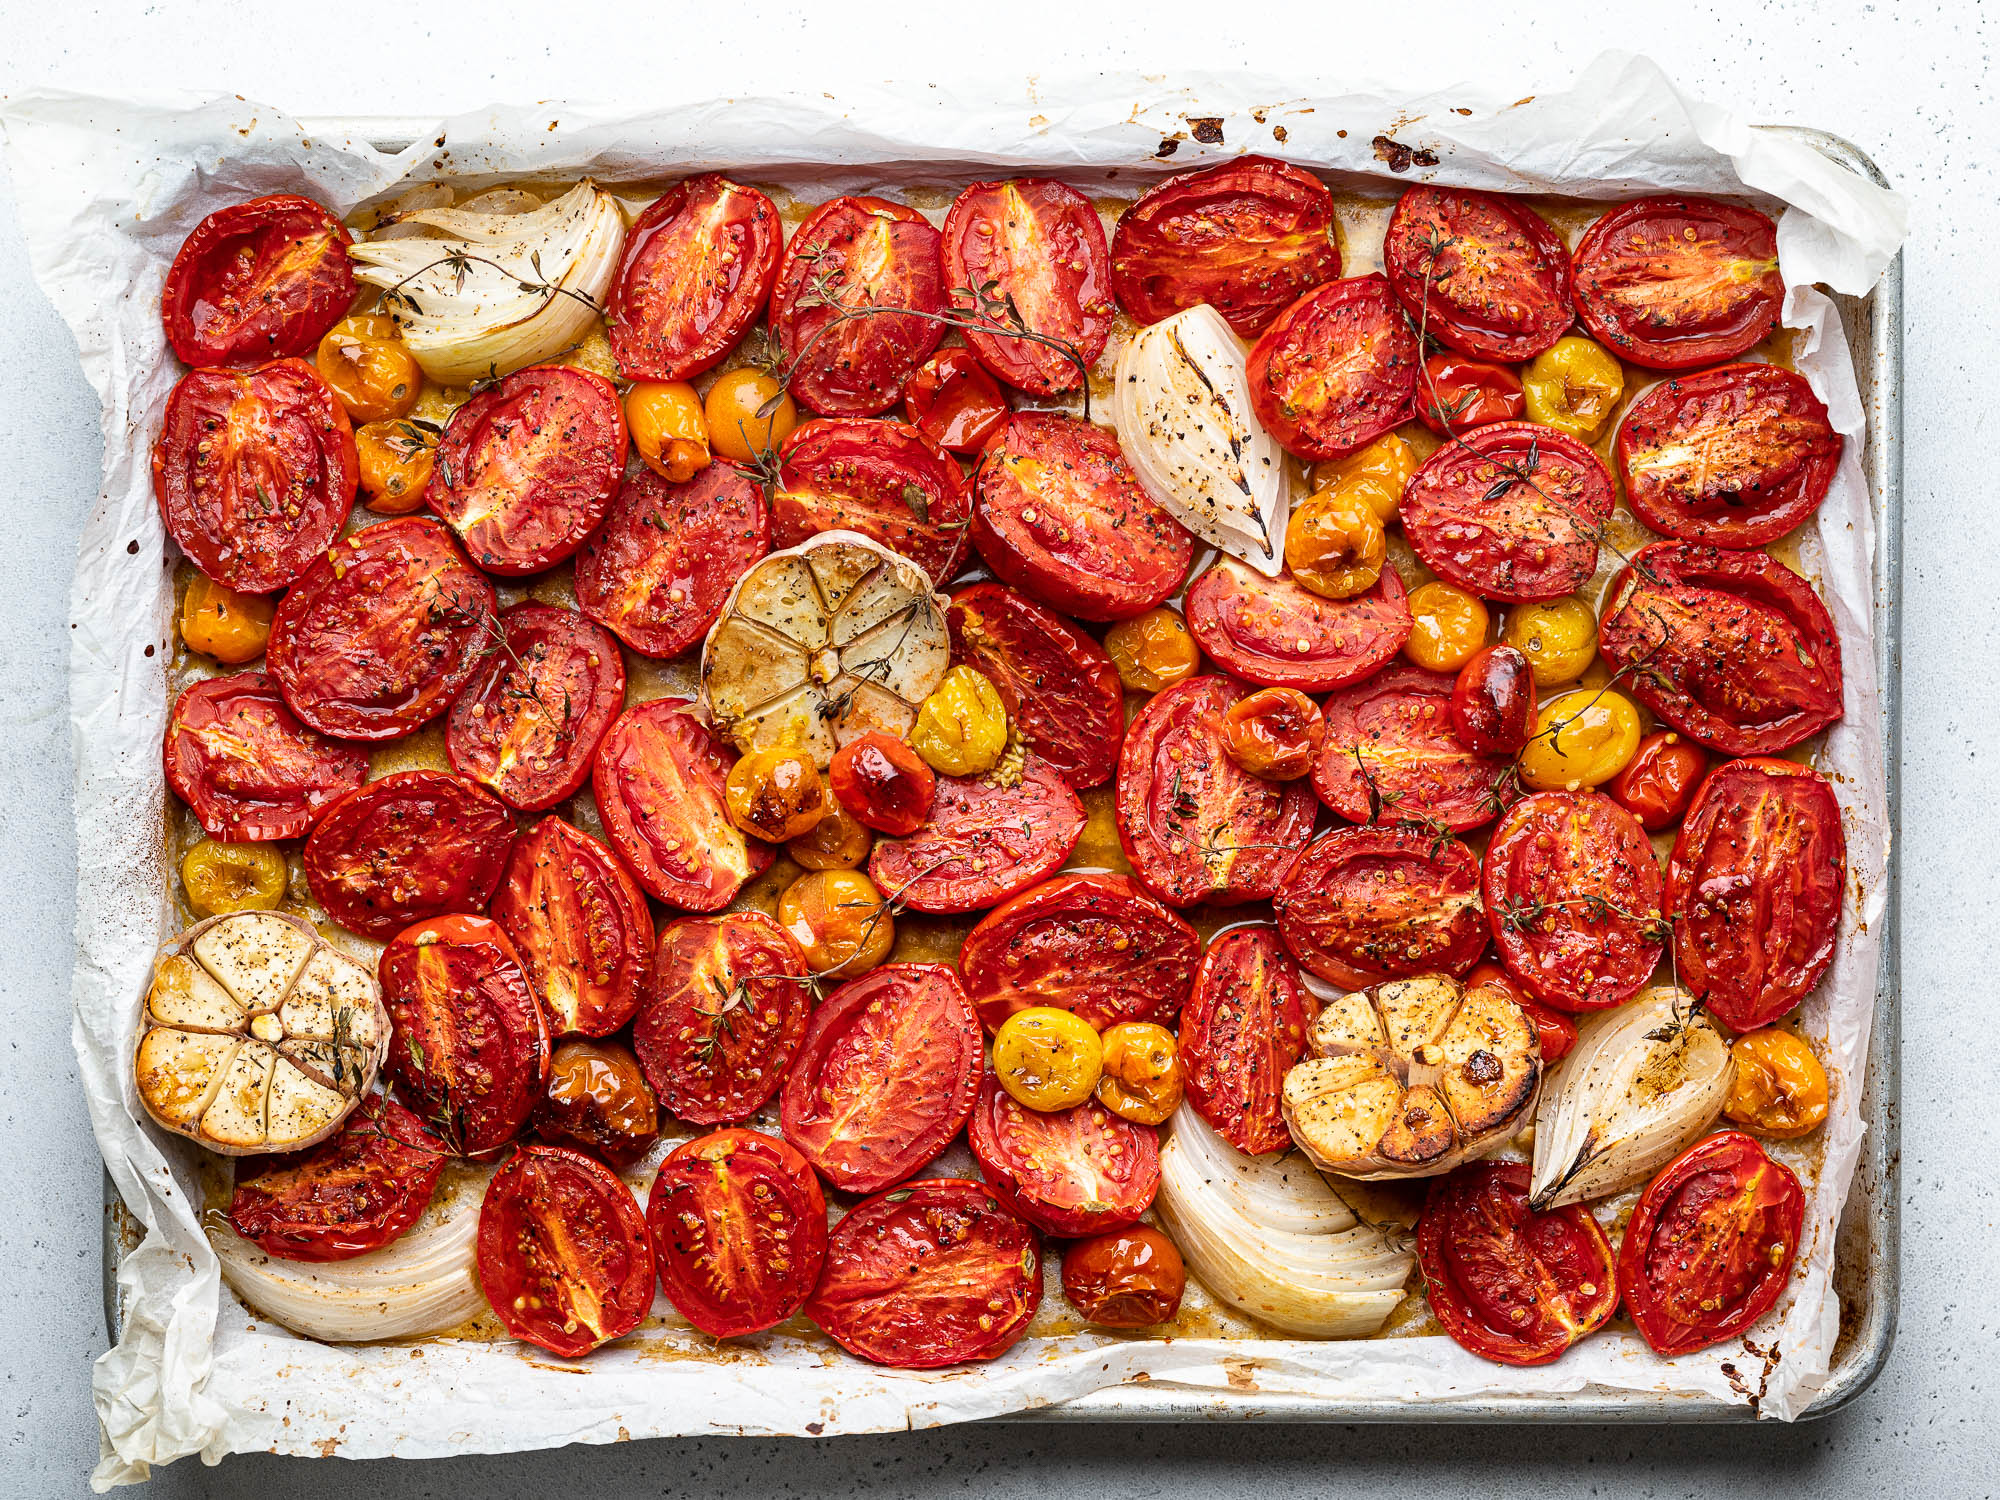 raw sliced tomatoes, onions, and garlic on sheet pan